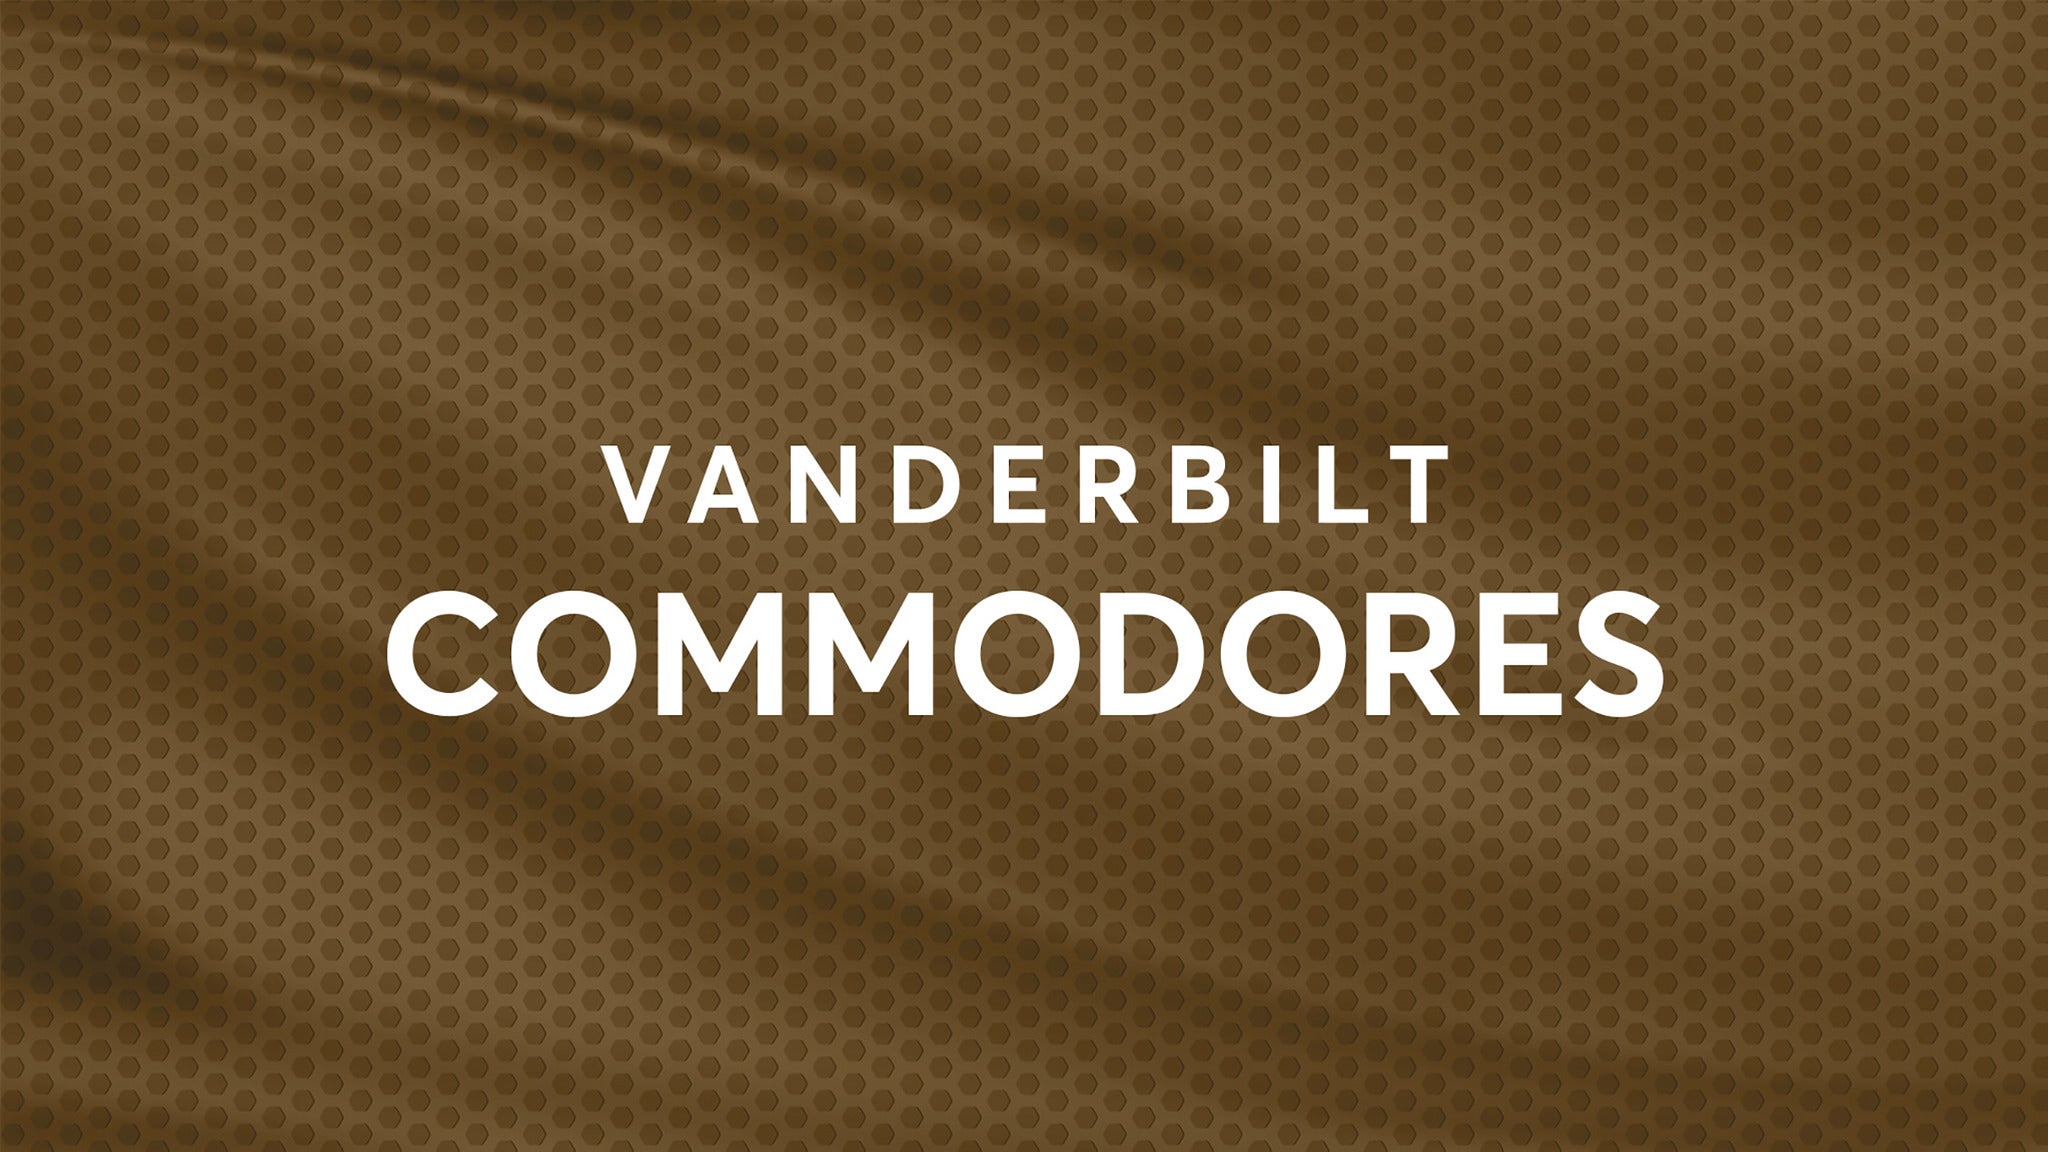 Vanderbilt Commodores Football vs. Tennessee Vols Football